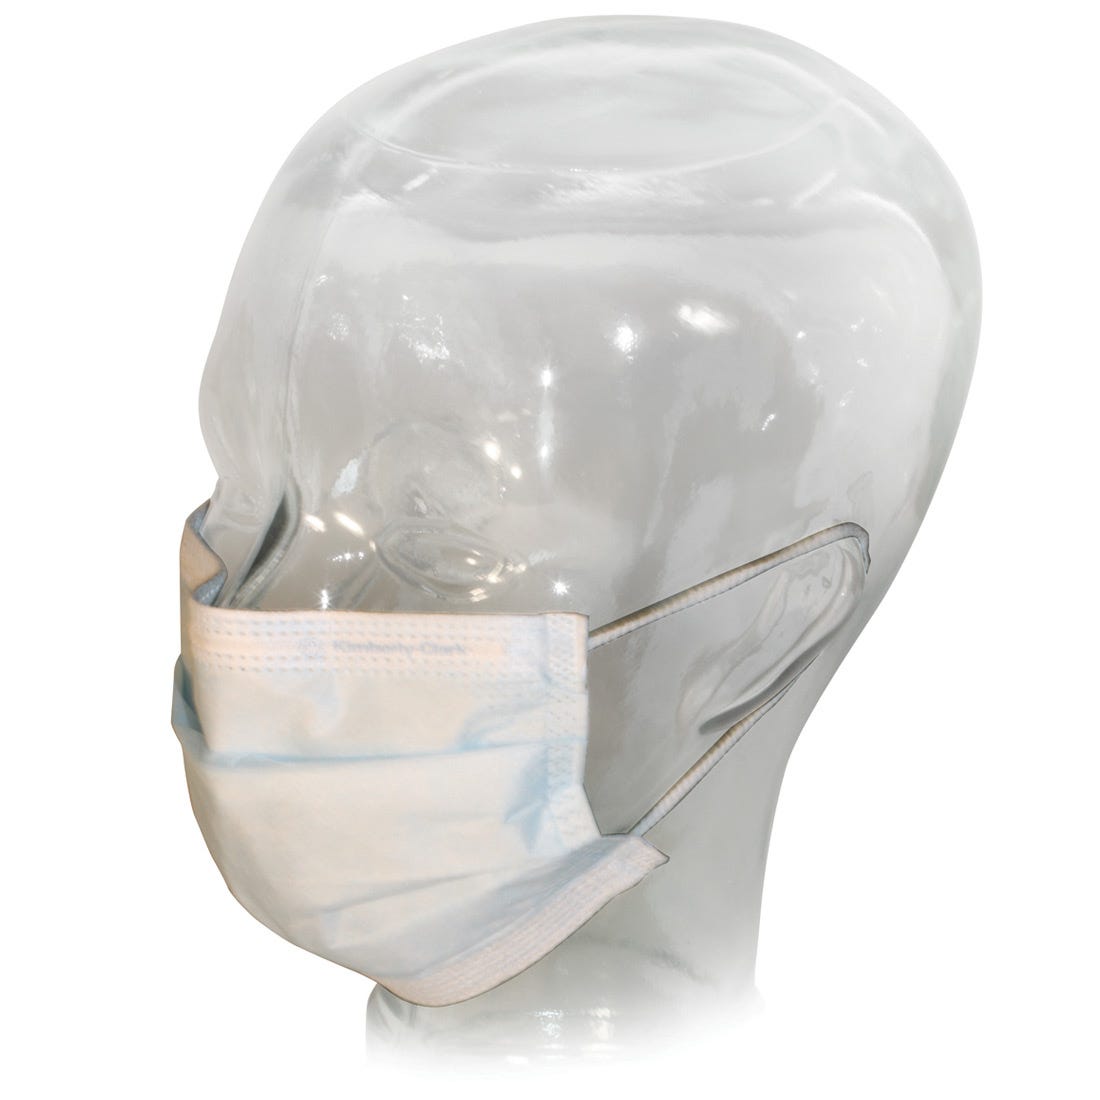 Halyard Splash Resistant Procedure Mask with Earloops, Level 2